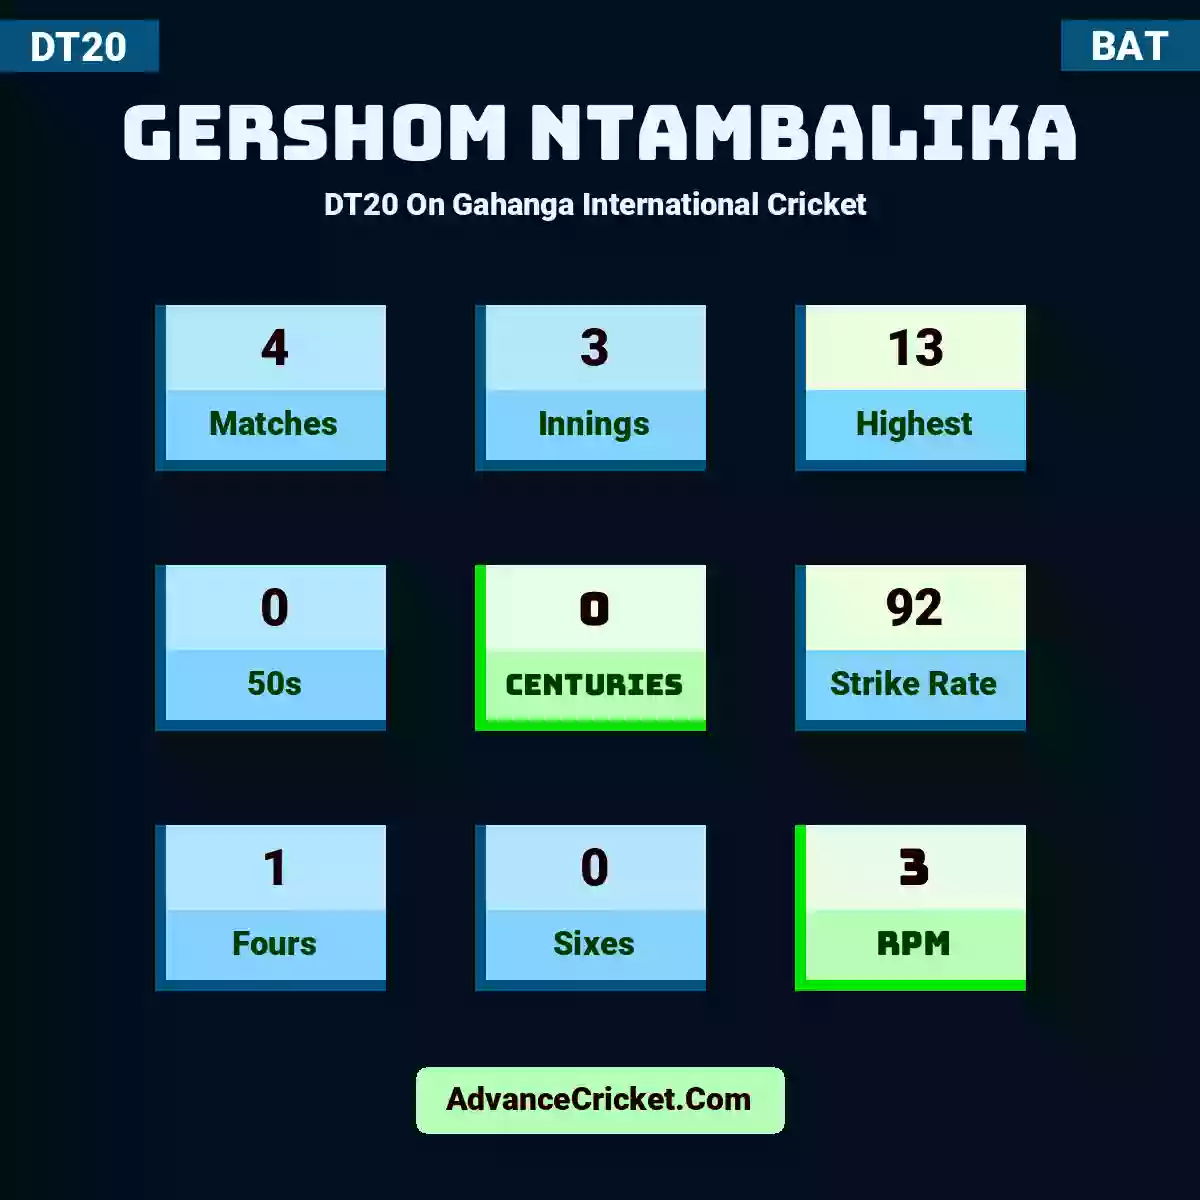 Gershom Ntambalika DT20  On Gahanga International Cricket , Gershom Ntambalika played 4 matches, scored 13 runs as highest, 0 half-centuries, and 0 centuries, with a strike rate of 92. G.Ntambalika hit 1 fours and 0 sixes, with an RPM of 3.